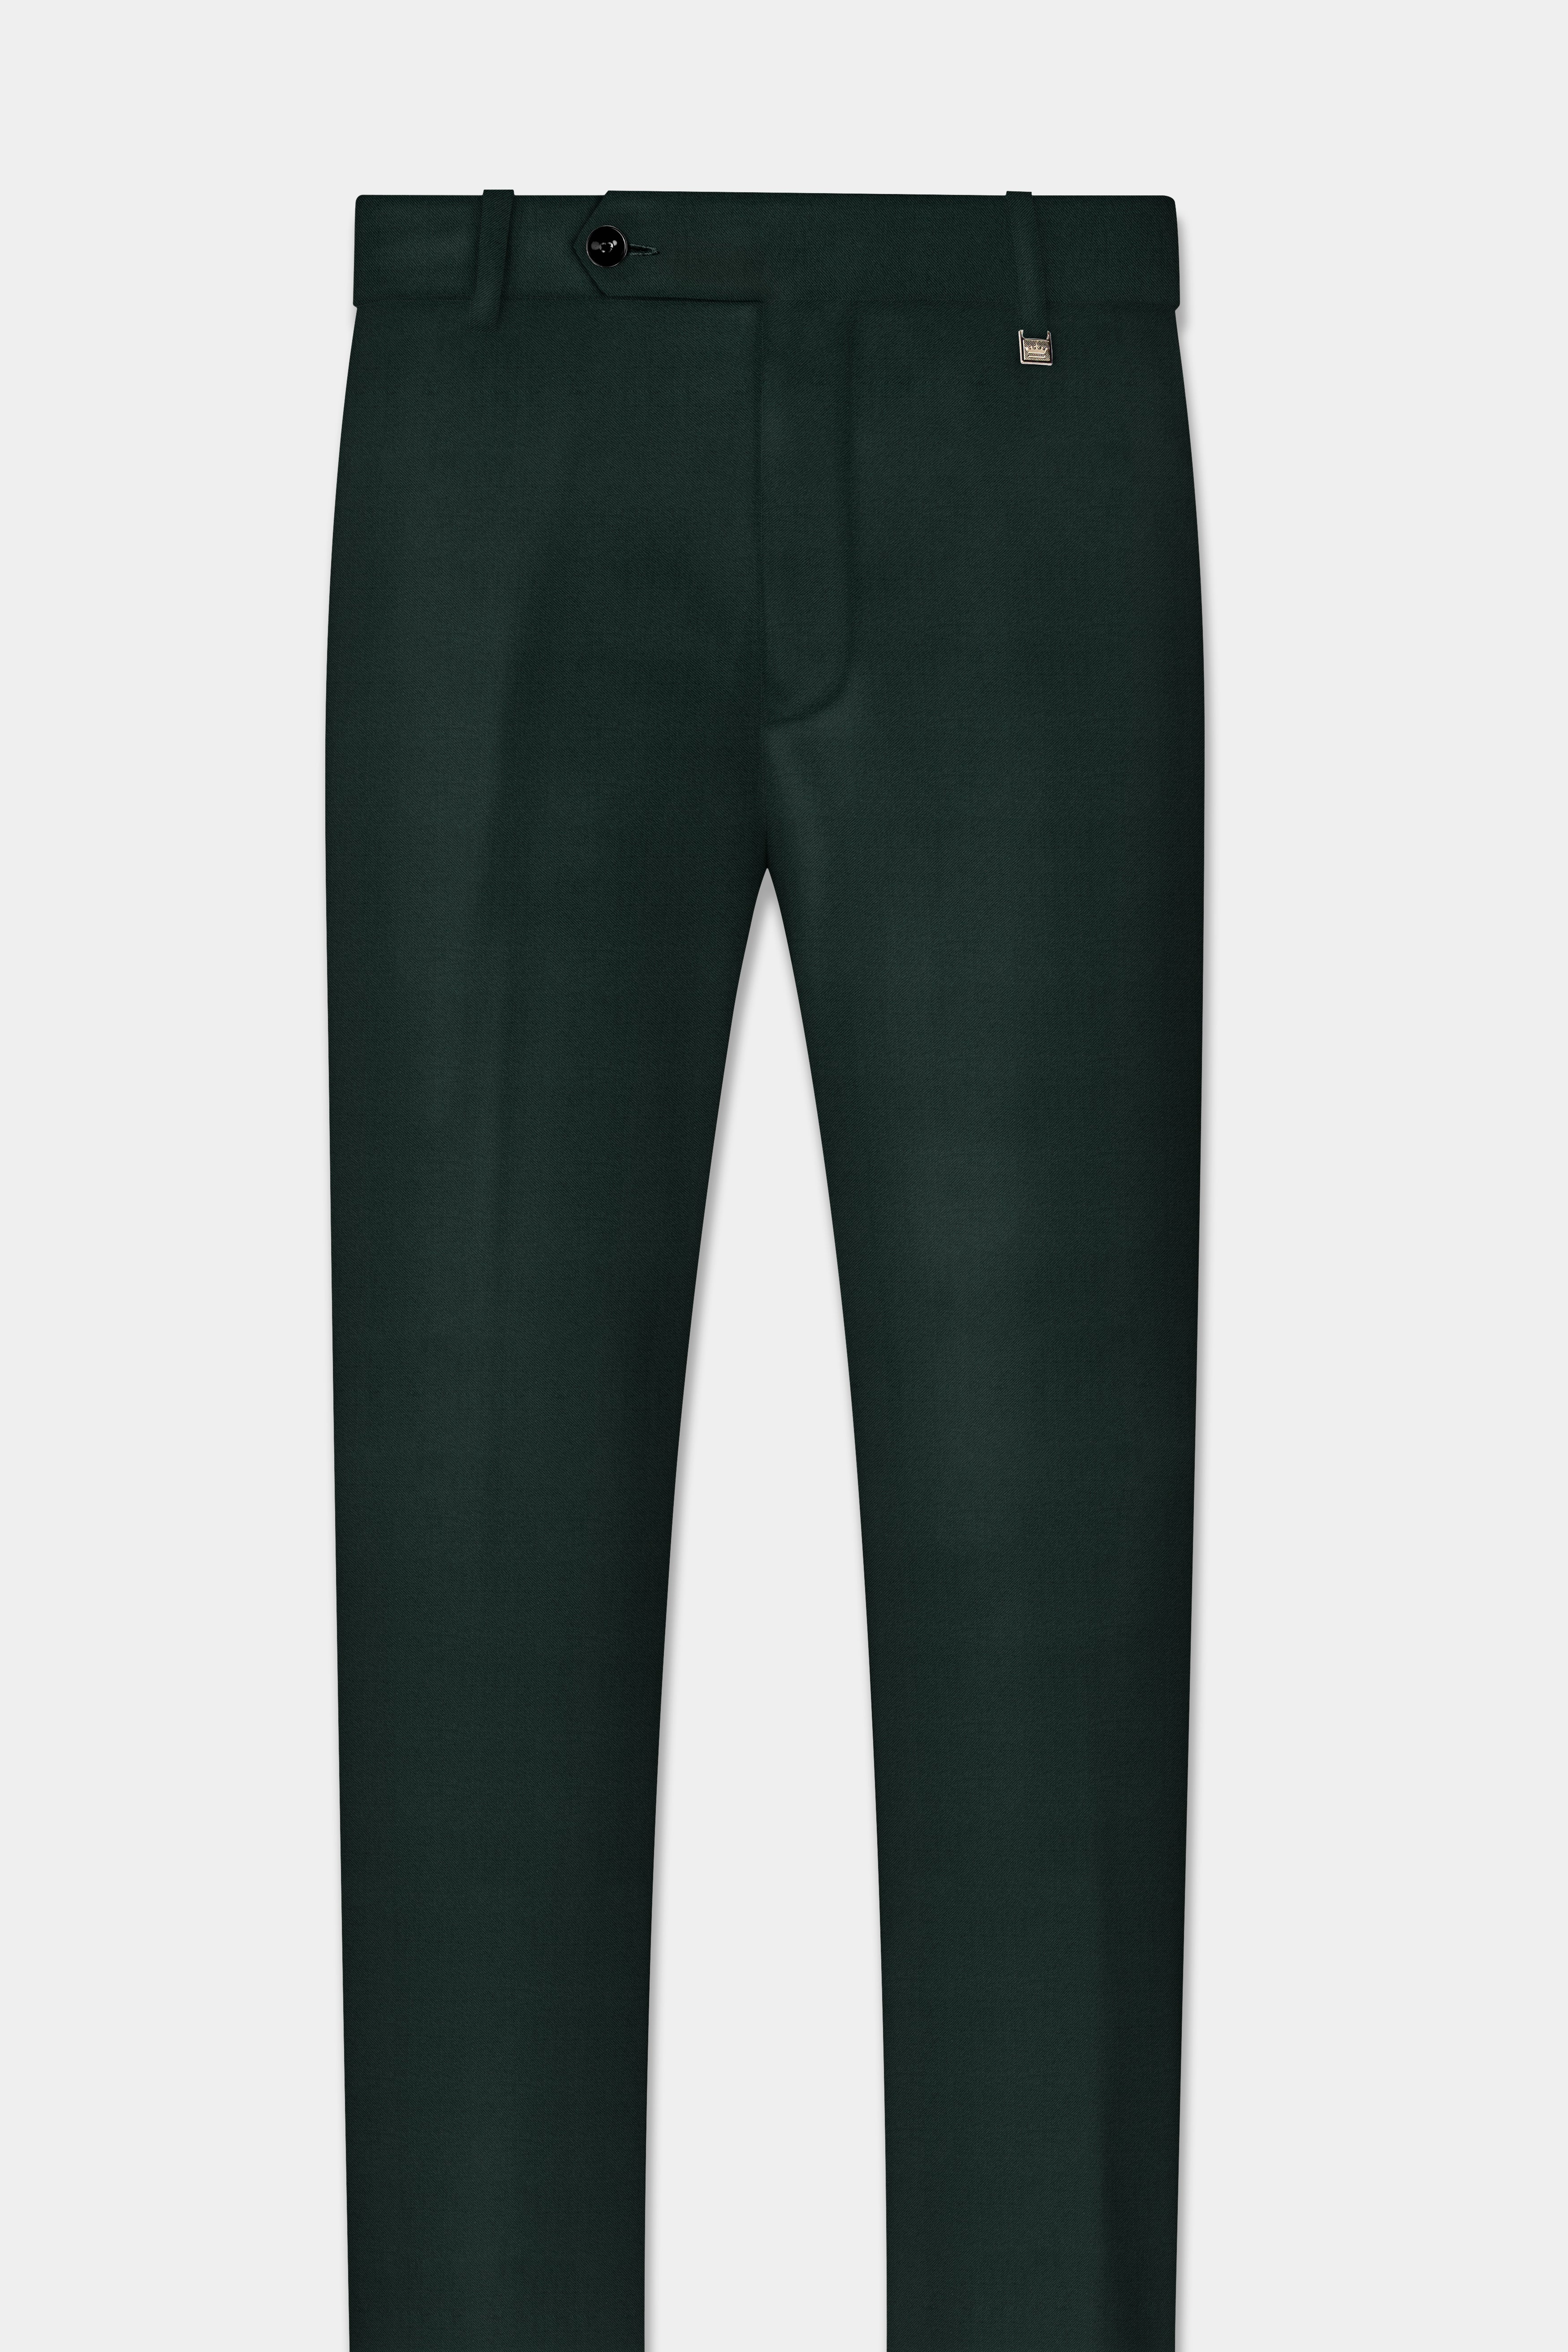 Buy John Players Beige Slim Semiformal Trousers - Trousers for Men 1244422  | Myntra